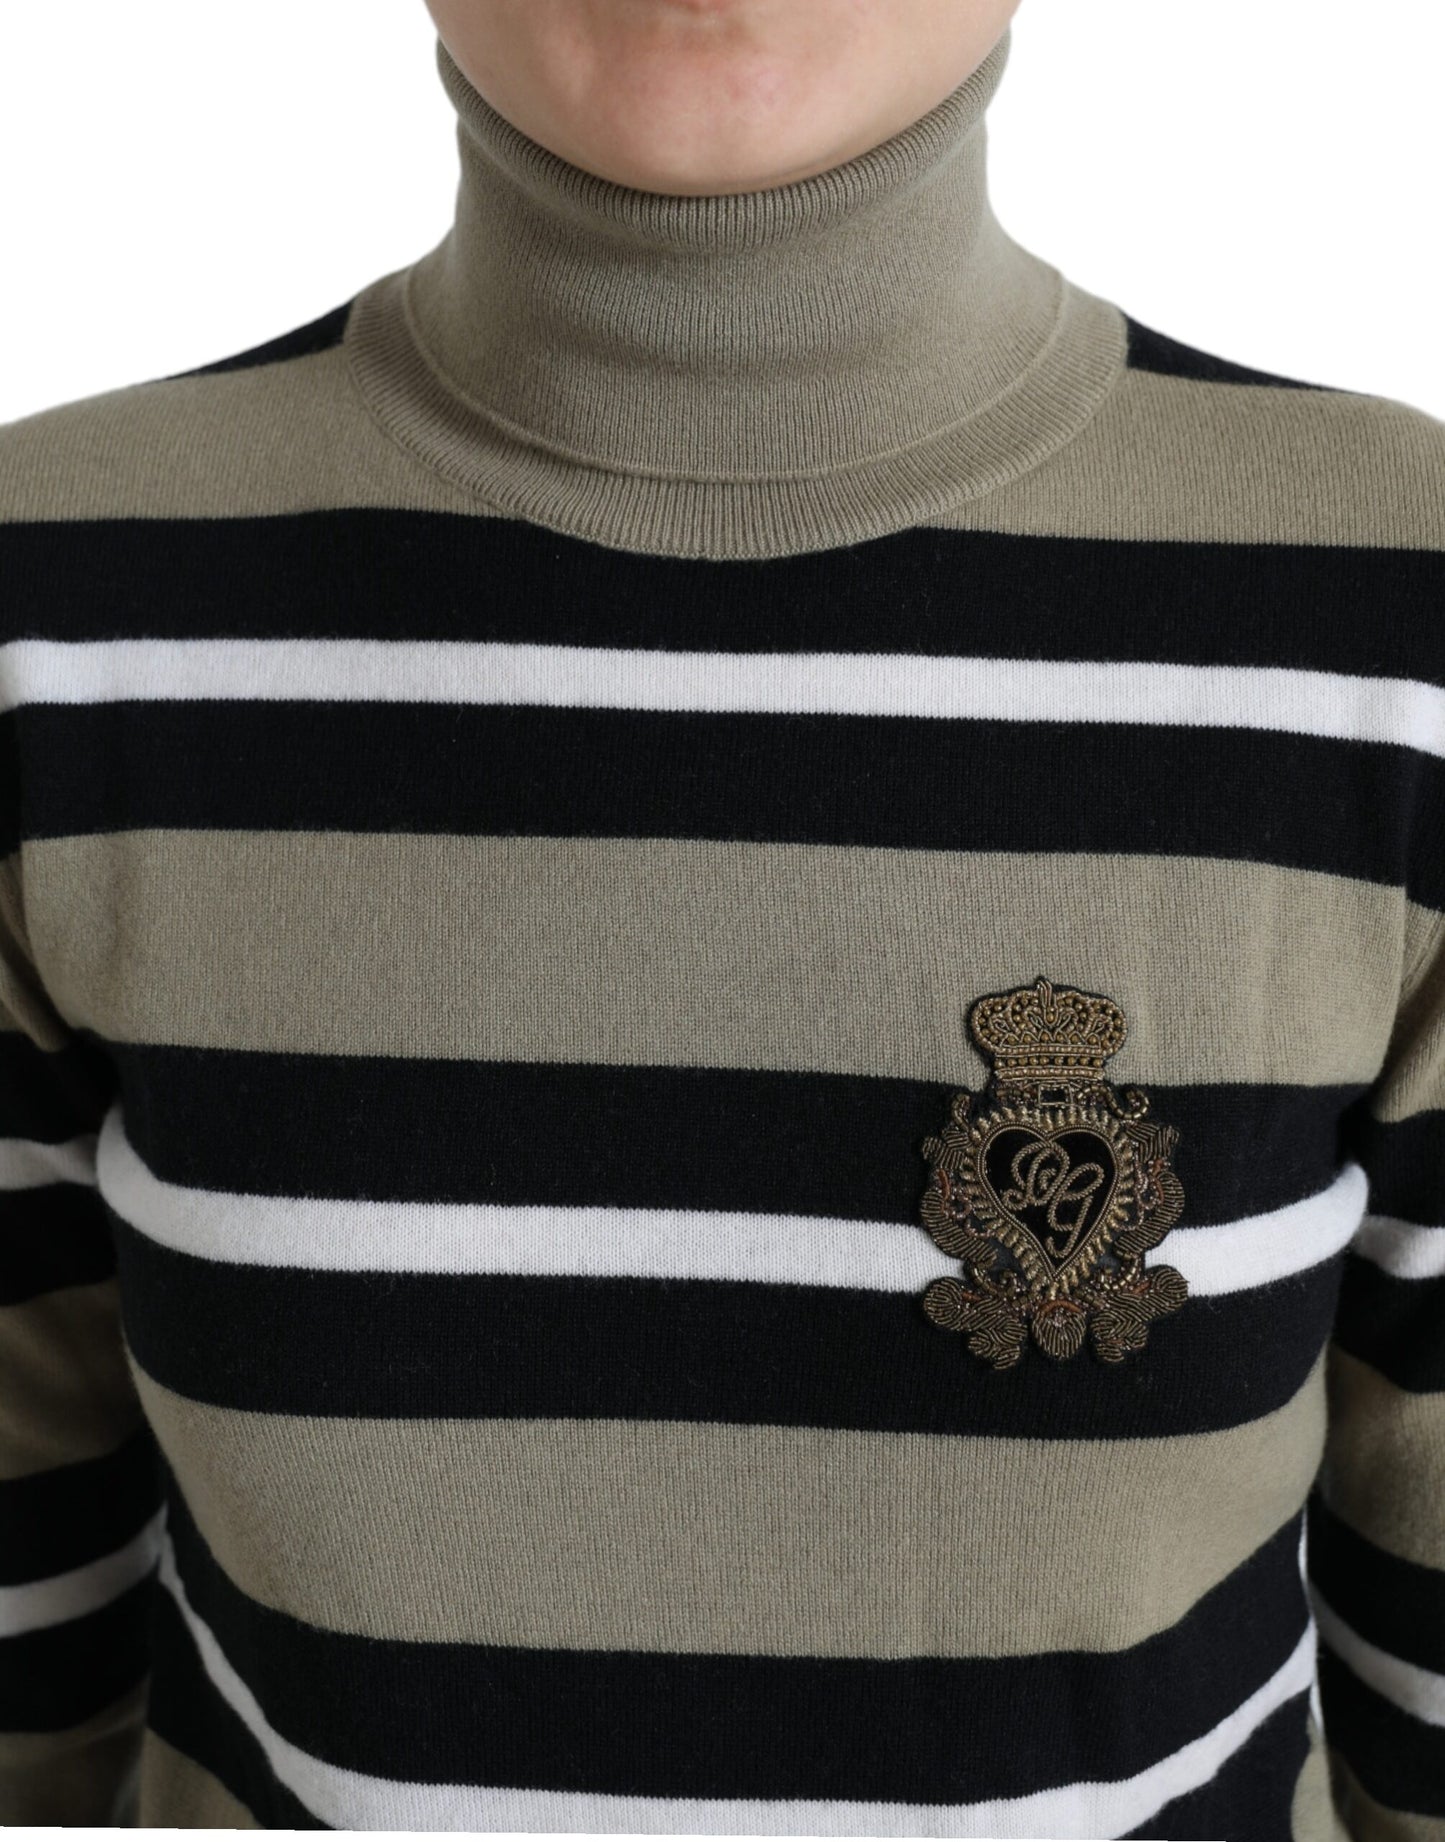 Multicolor Striped Wool Turtleneck Sweater